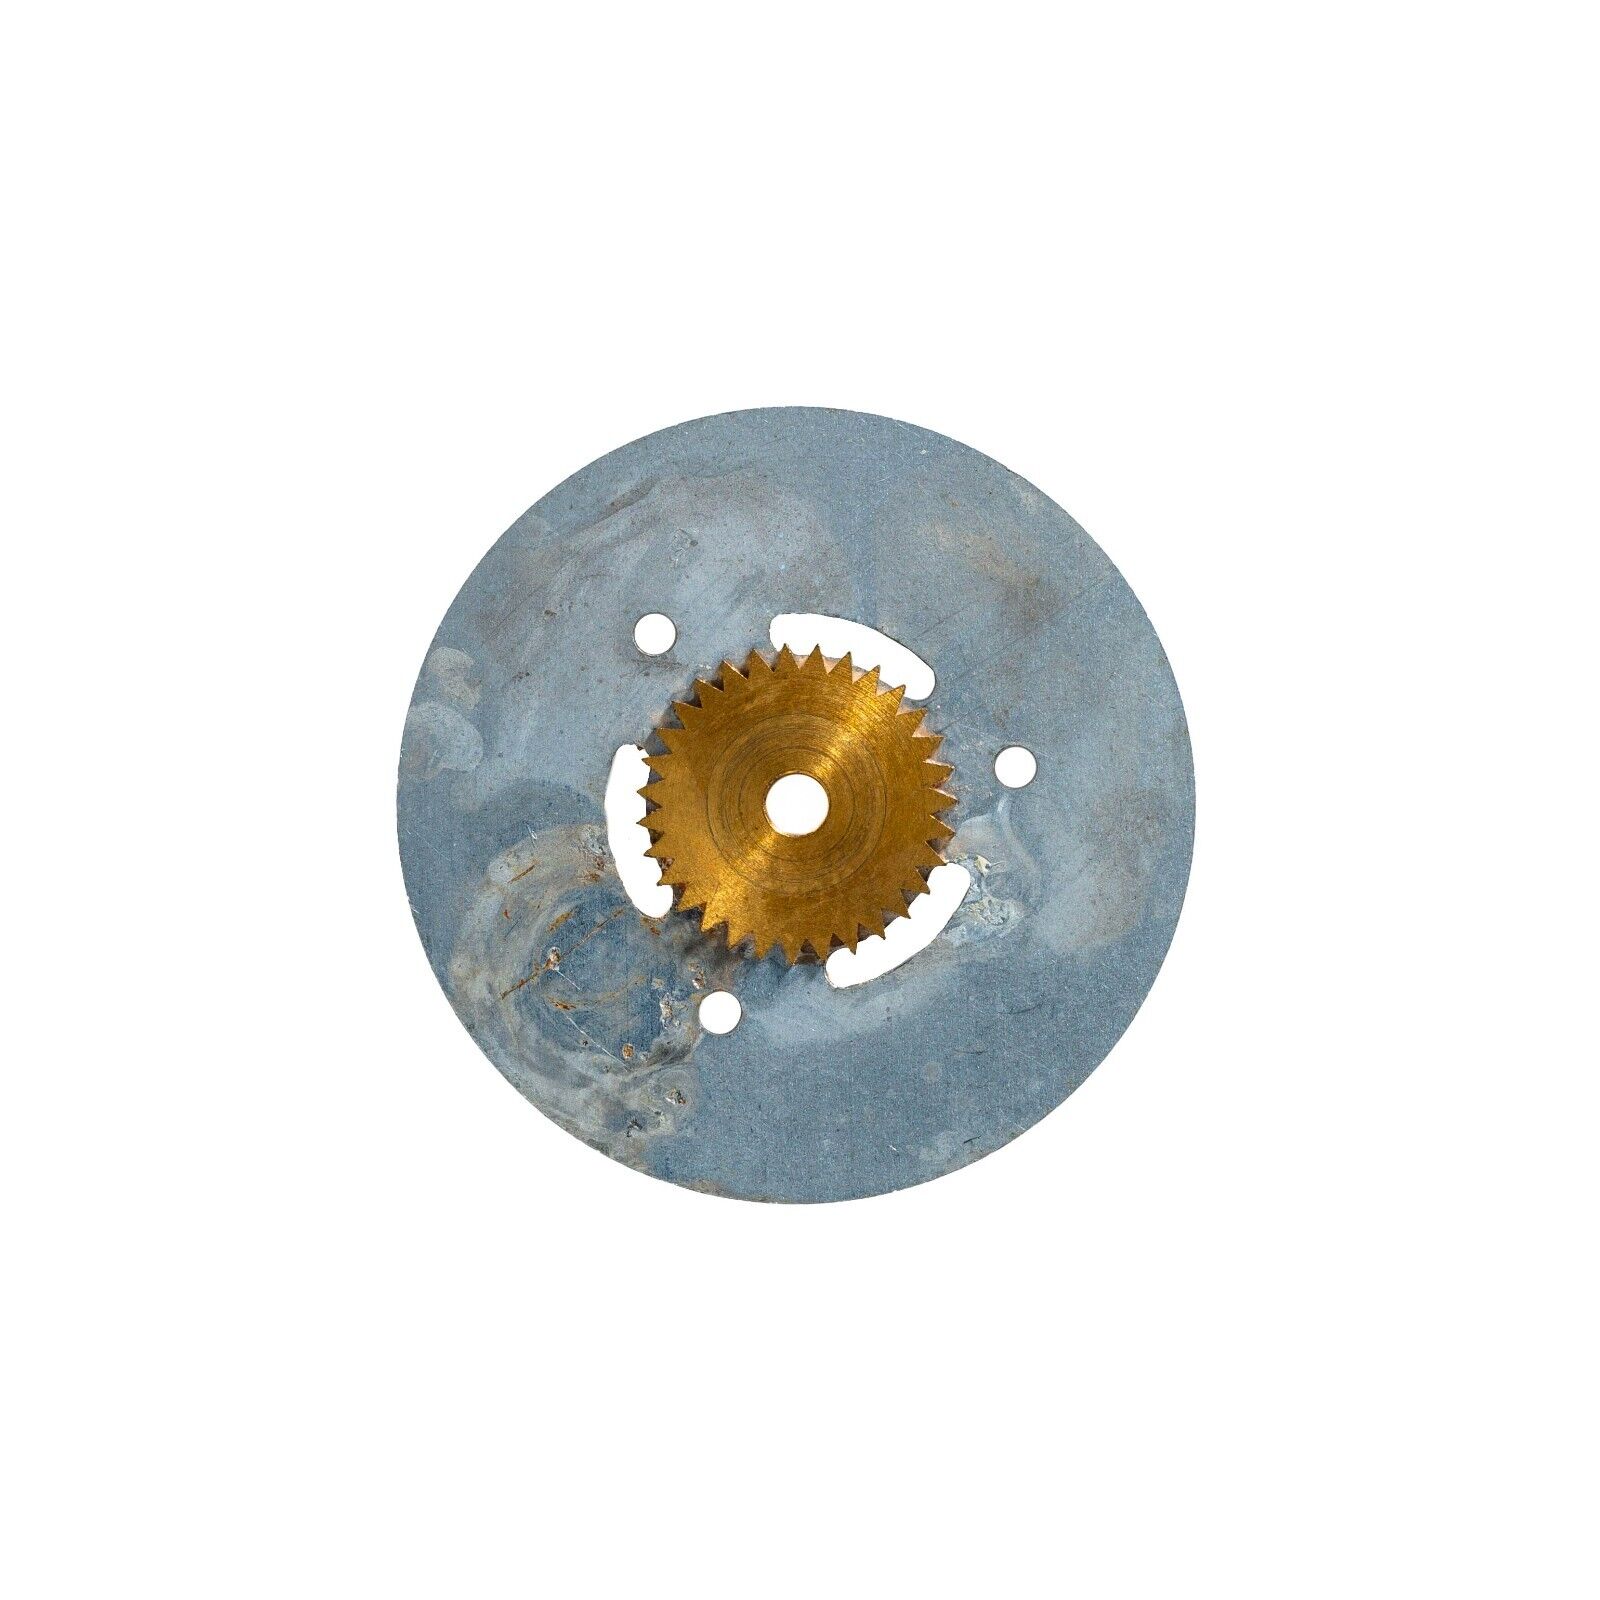 Genuine Rolex 2035 Date Disc Indicator Wheel #4520 Watch Part Gallery Image 0